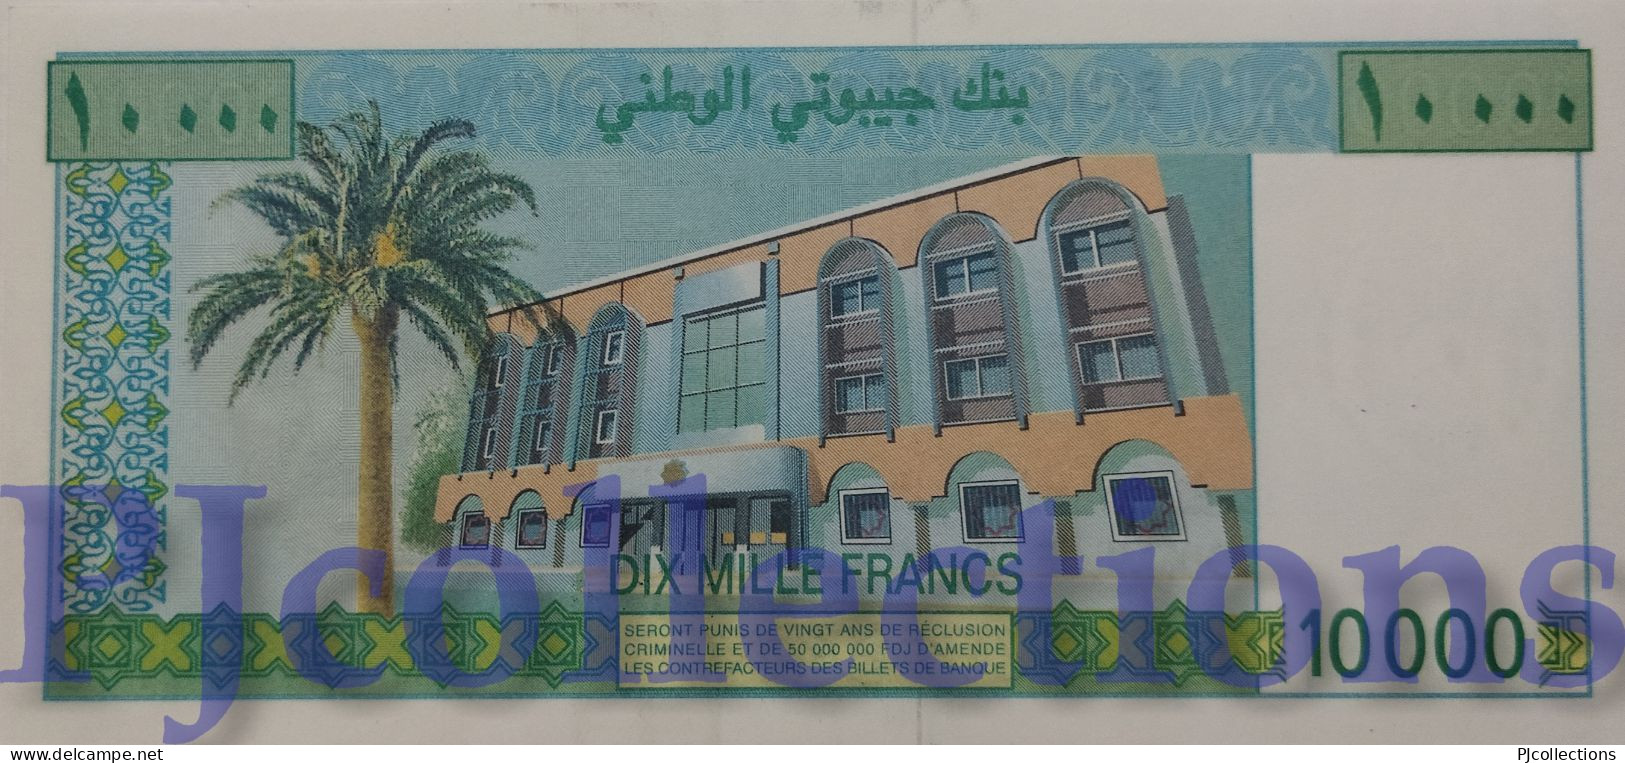 DJIBOUTI 10000 FRANCS 1999 PICK 41 UNC - Dschibuti